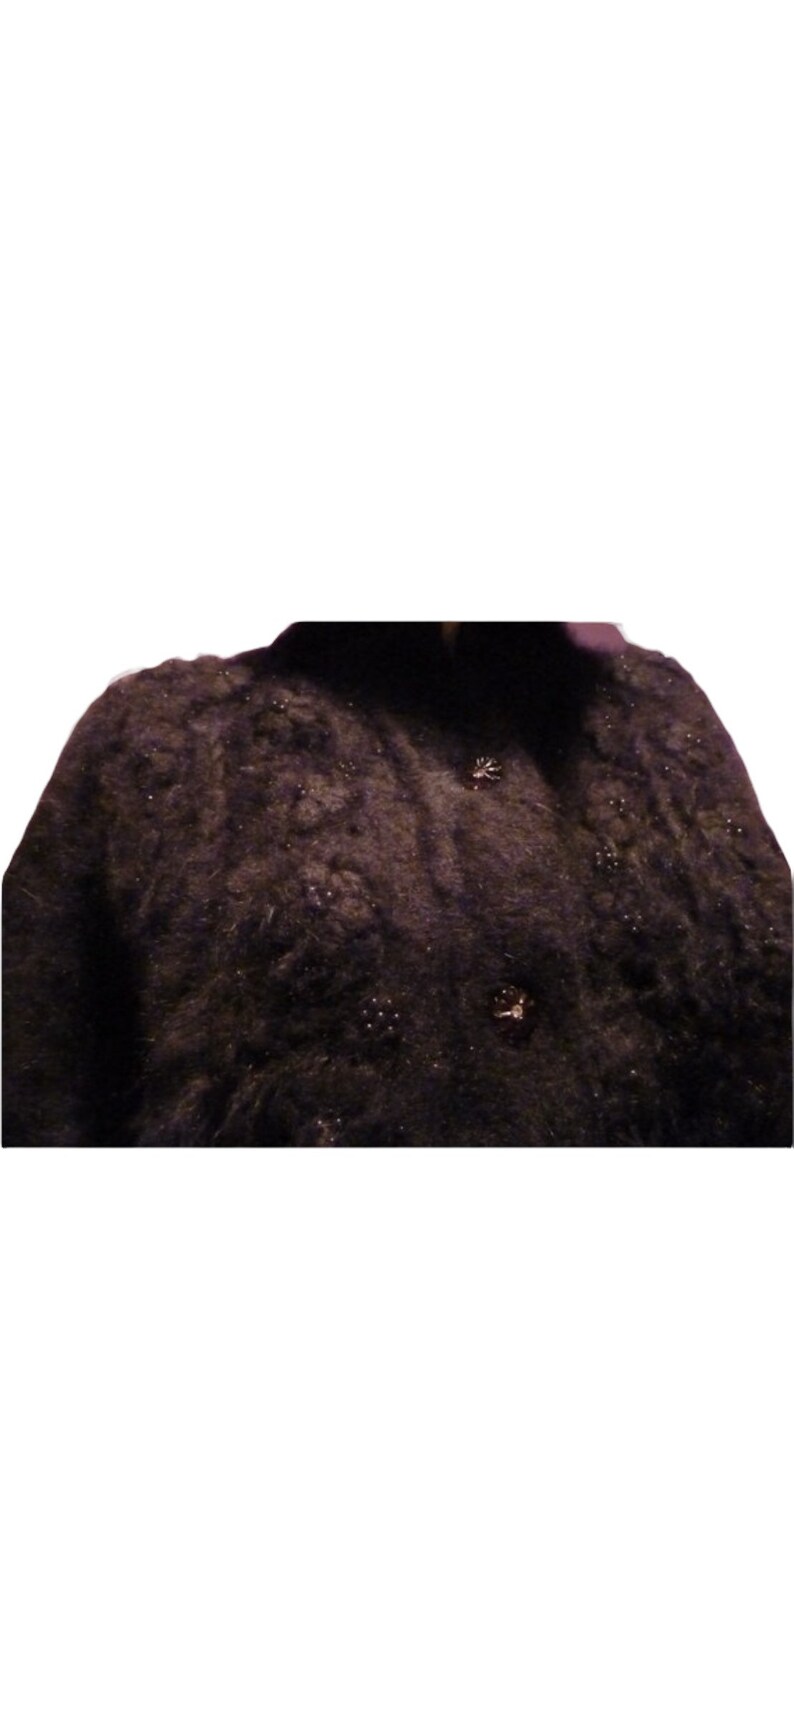 SALE fantastic circa 1970 meets the 50s cashmere blend embellished sweater coat jacket size small medium largemall medium large image 4